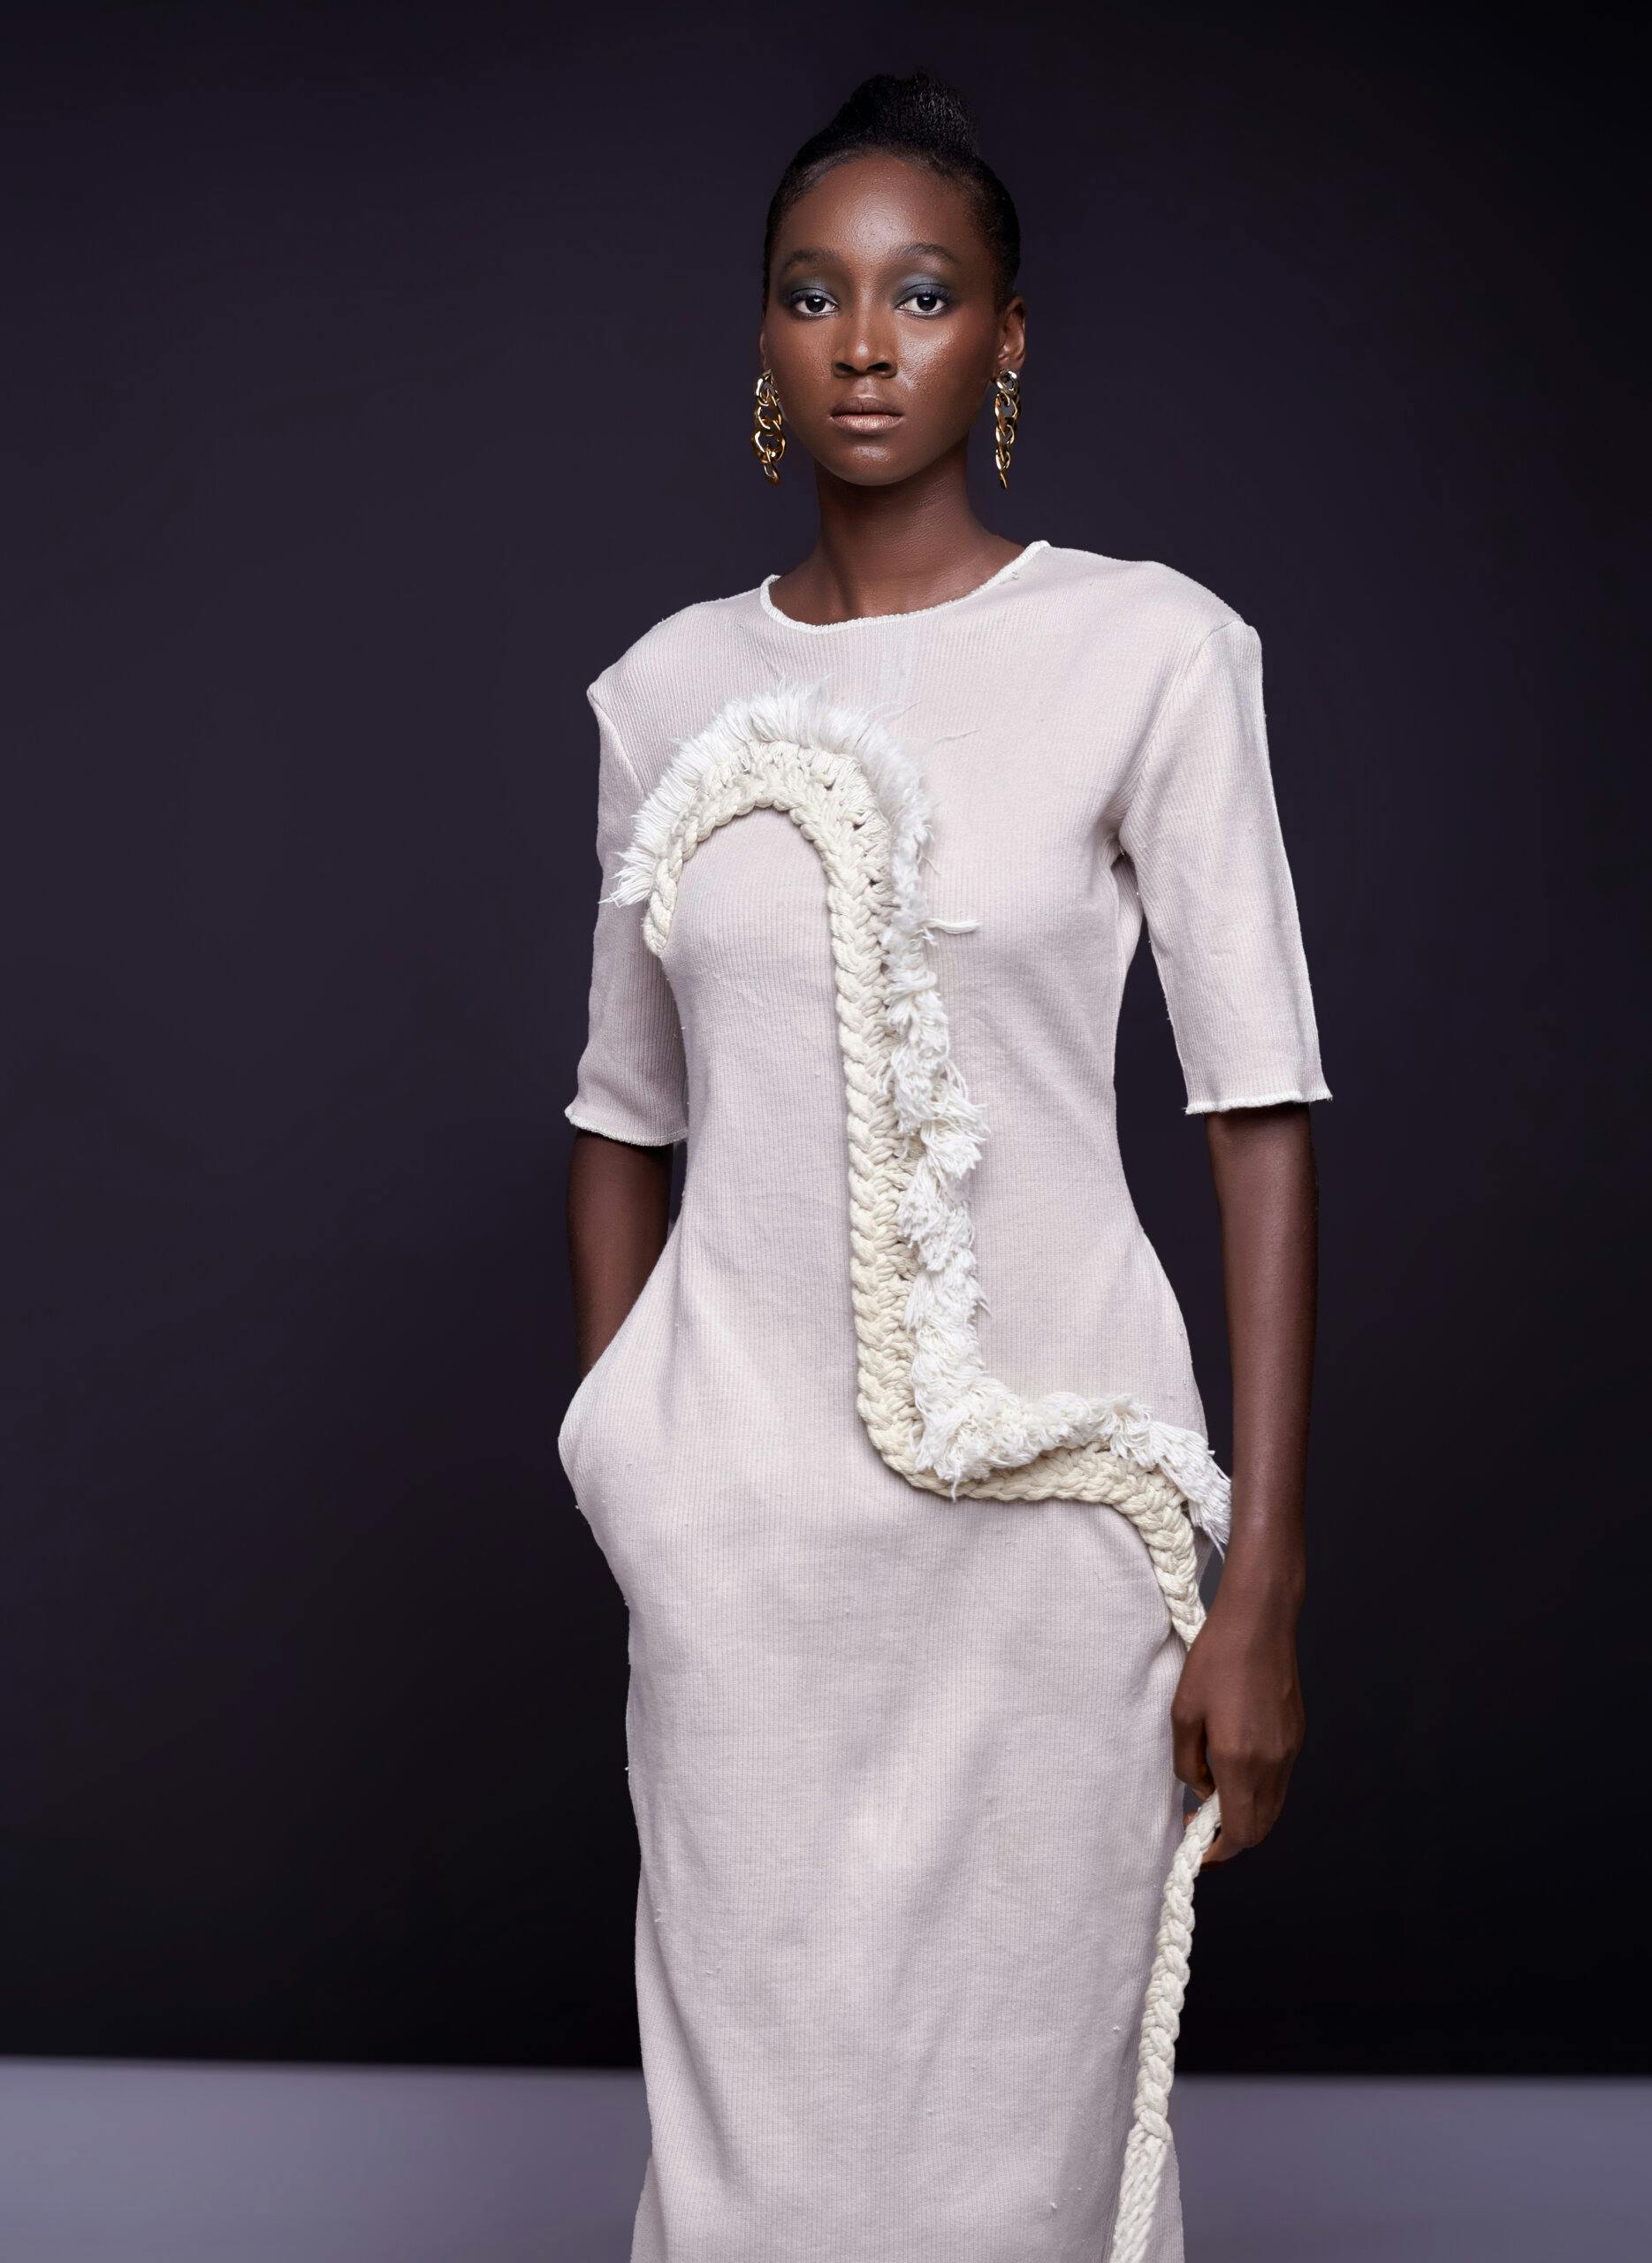 The Tellewoyan Knit dress, a product by Joseph Ejiro